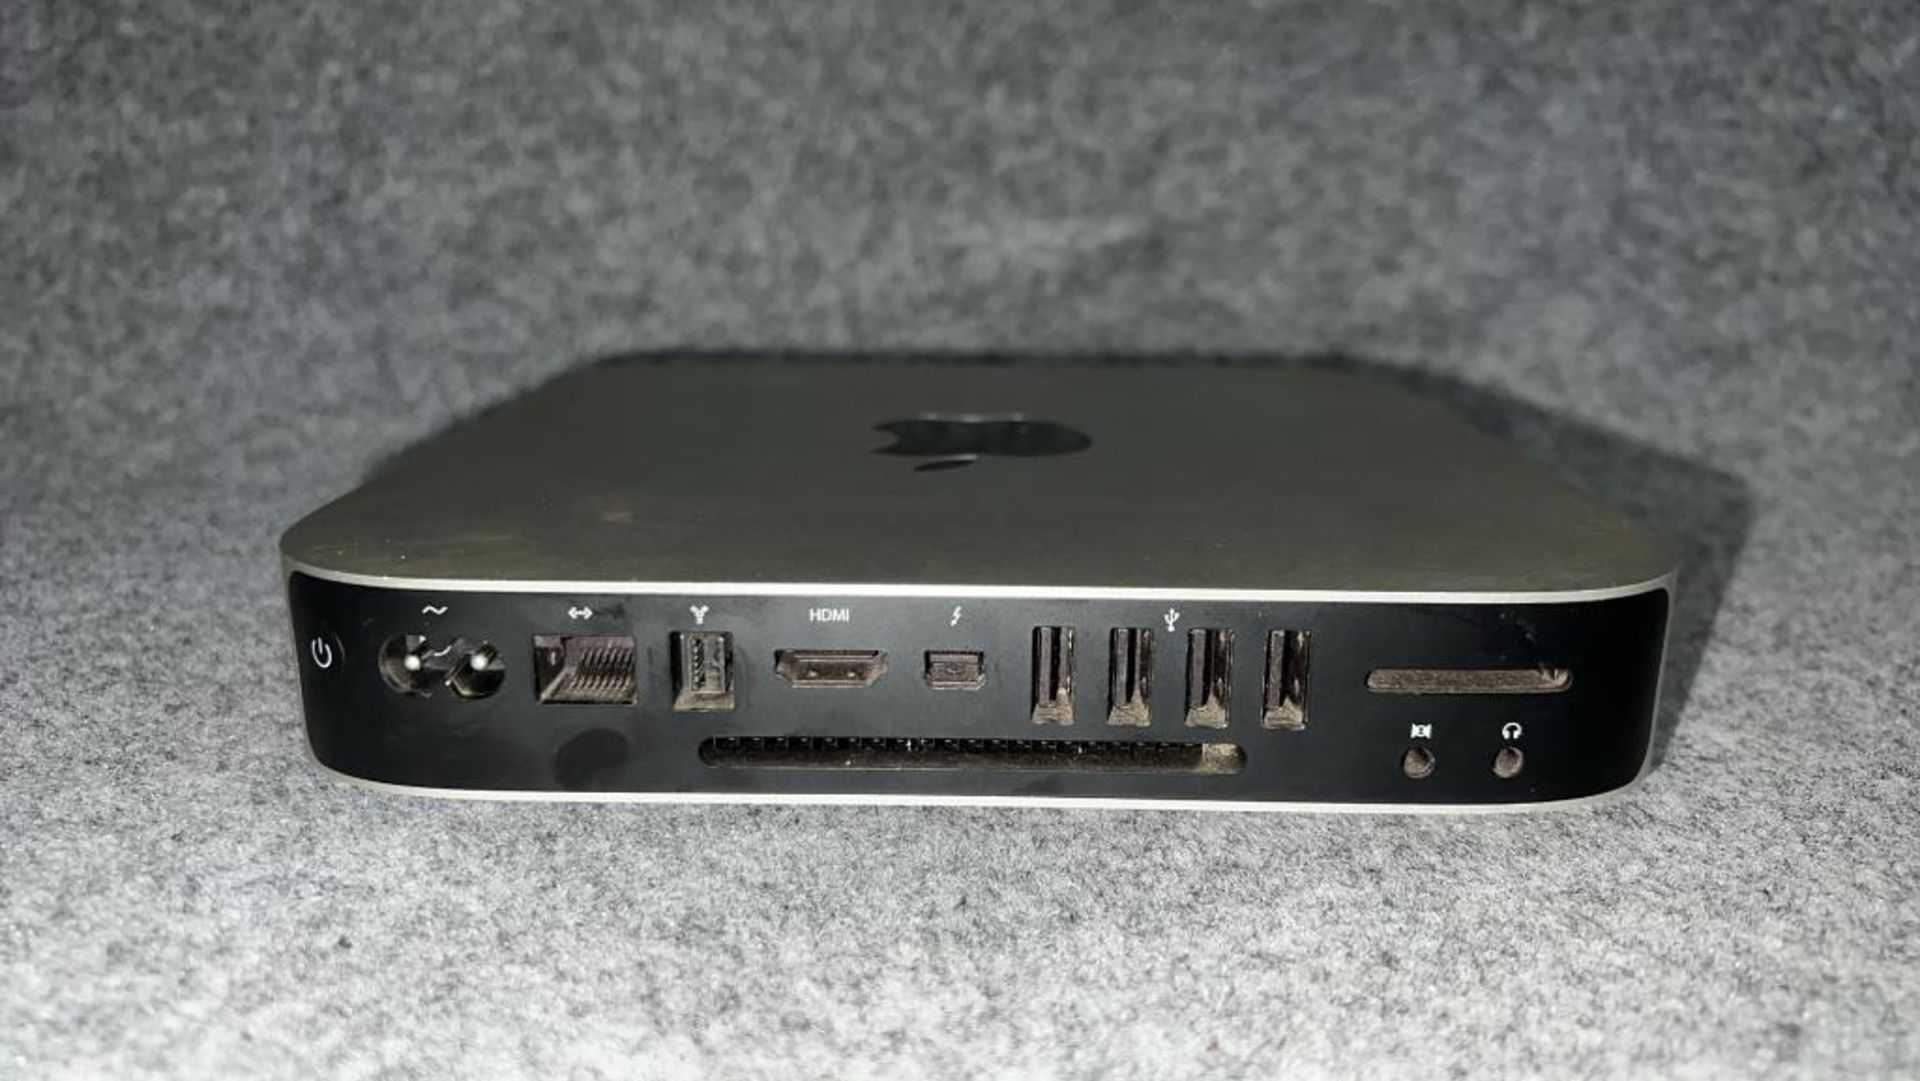 MAC mini server - late 2010, model A1347- spec unknown - Image 4 of 7